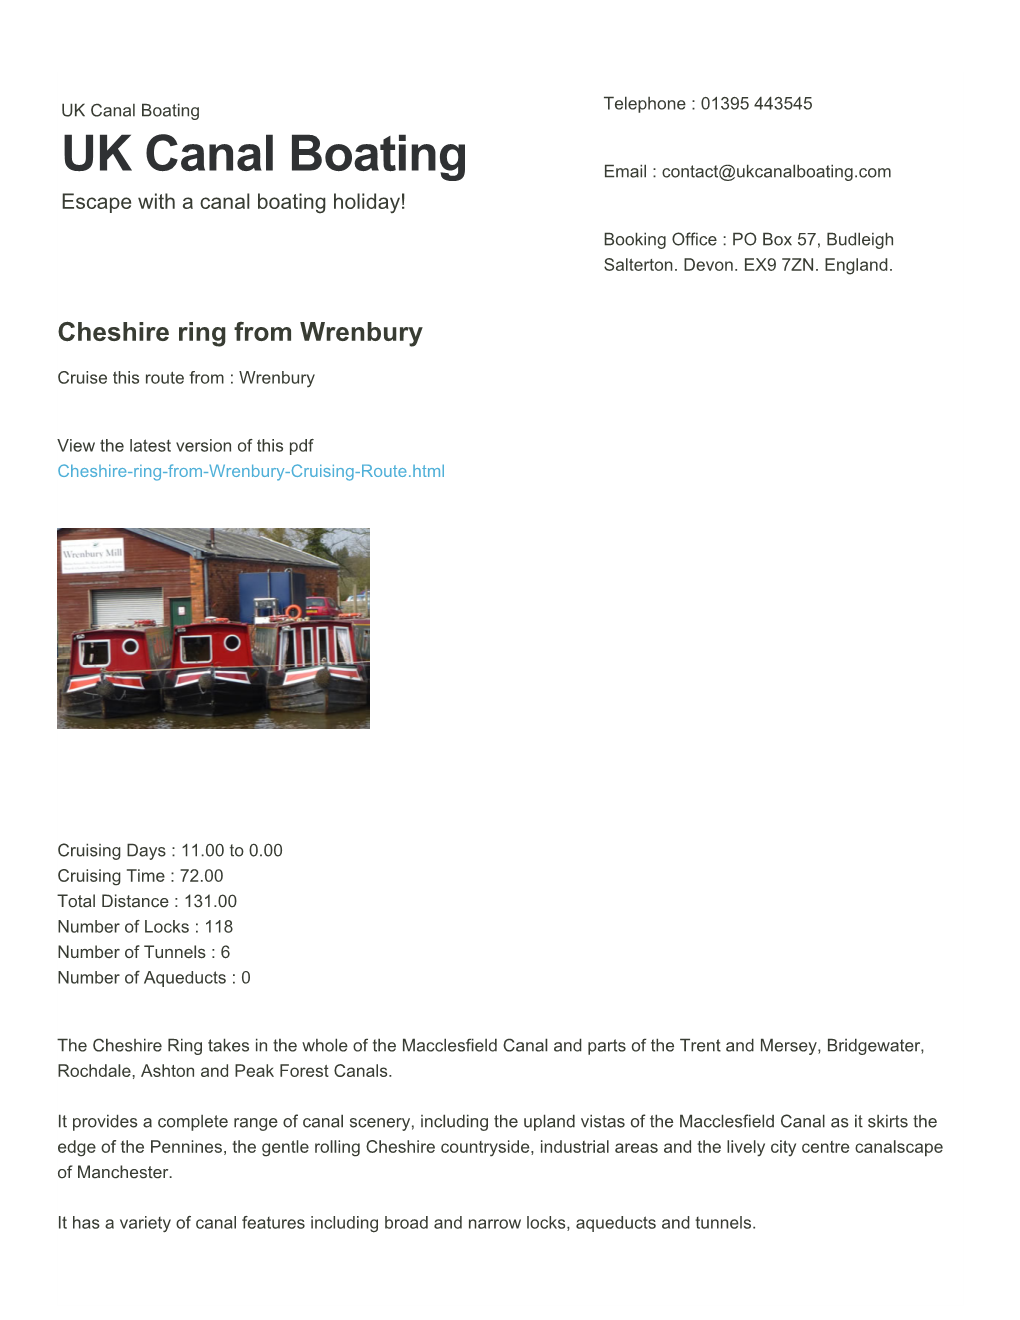 Cheshire Ring from Wrenbury | UK Canal Boating